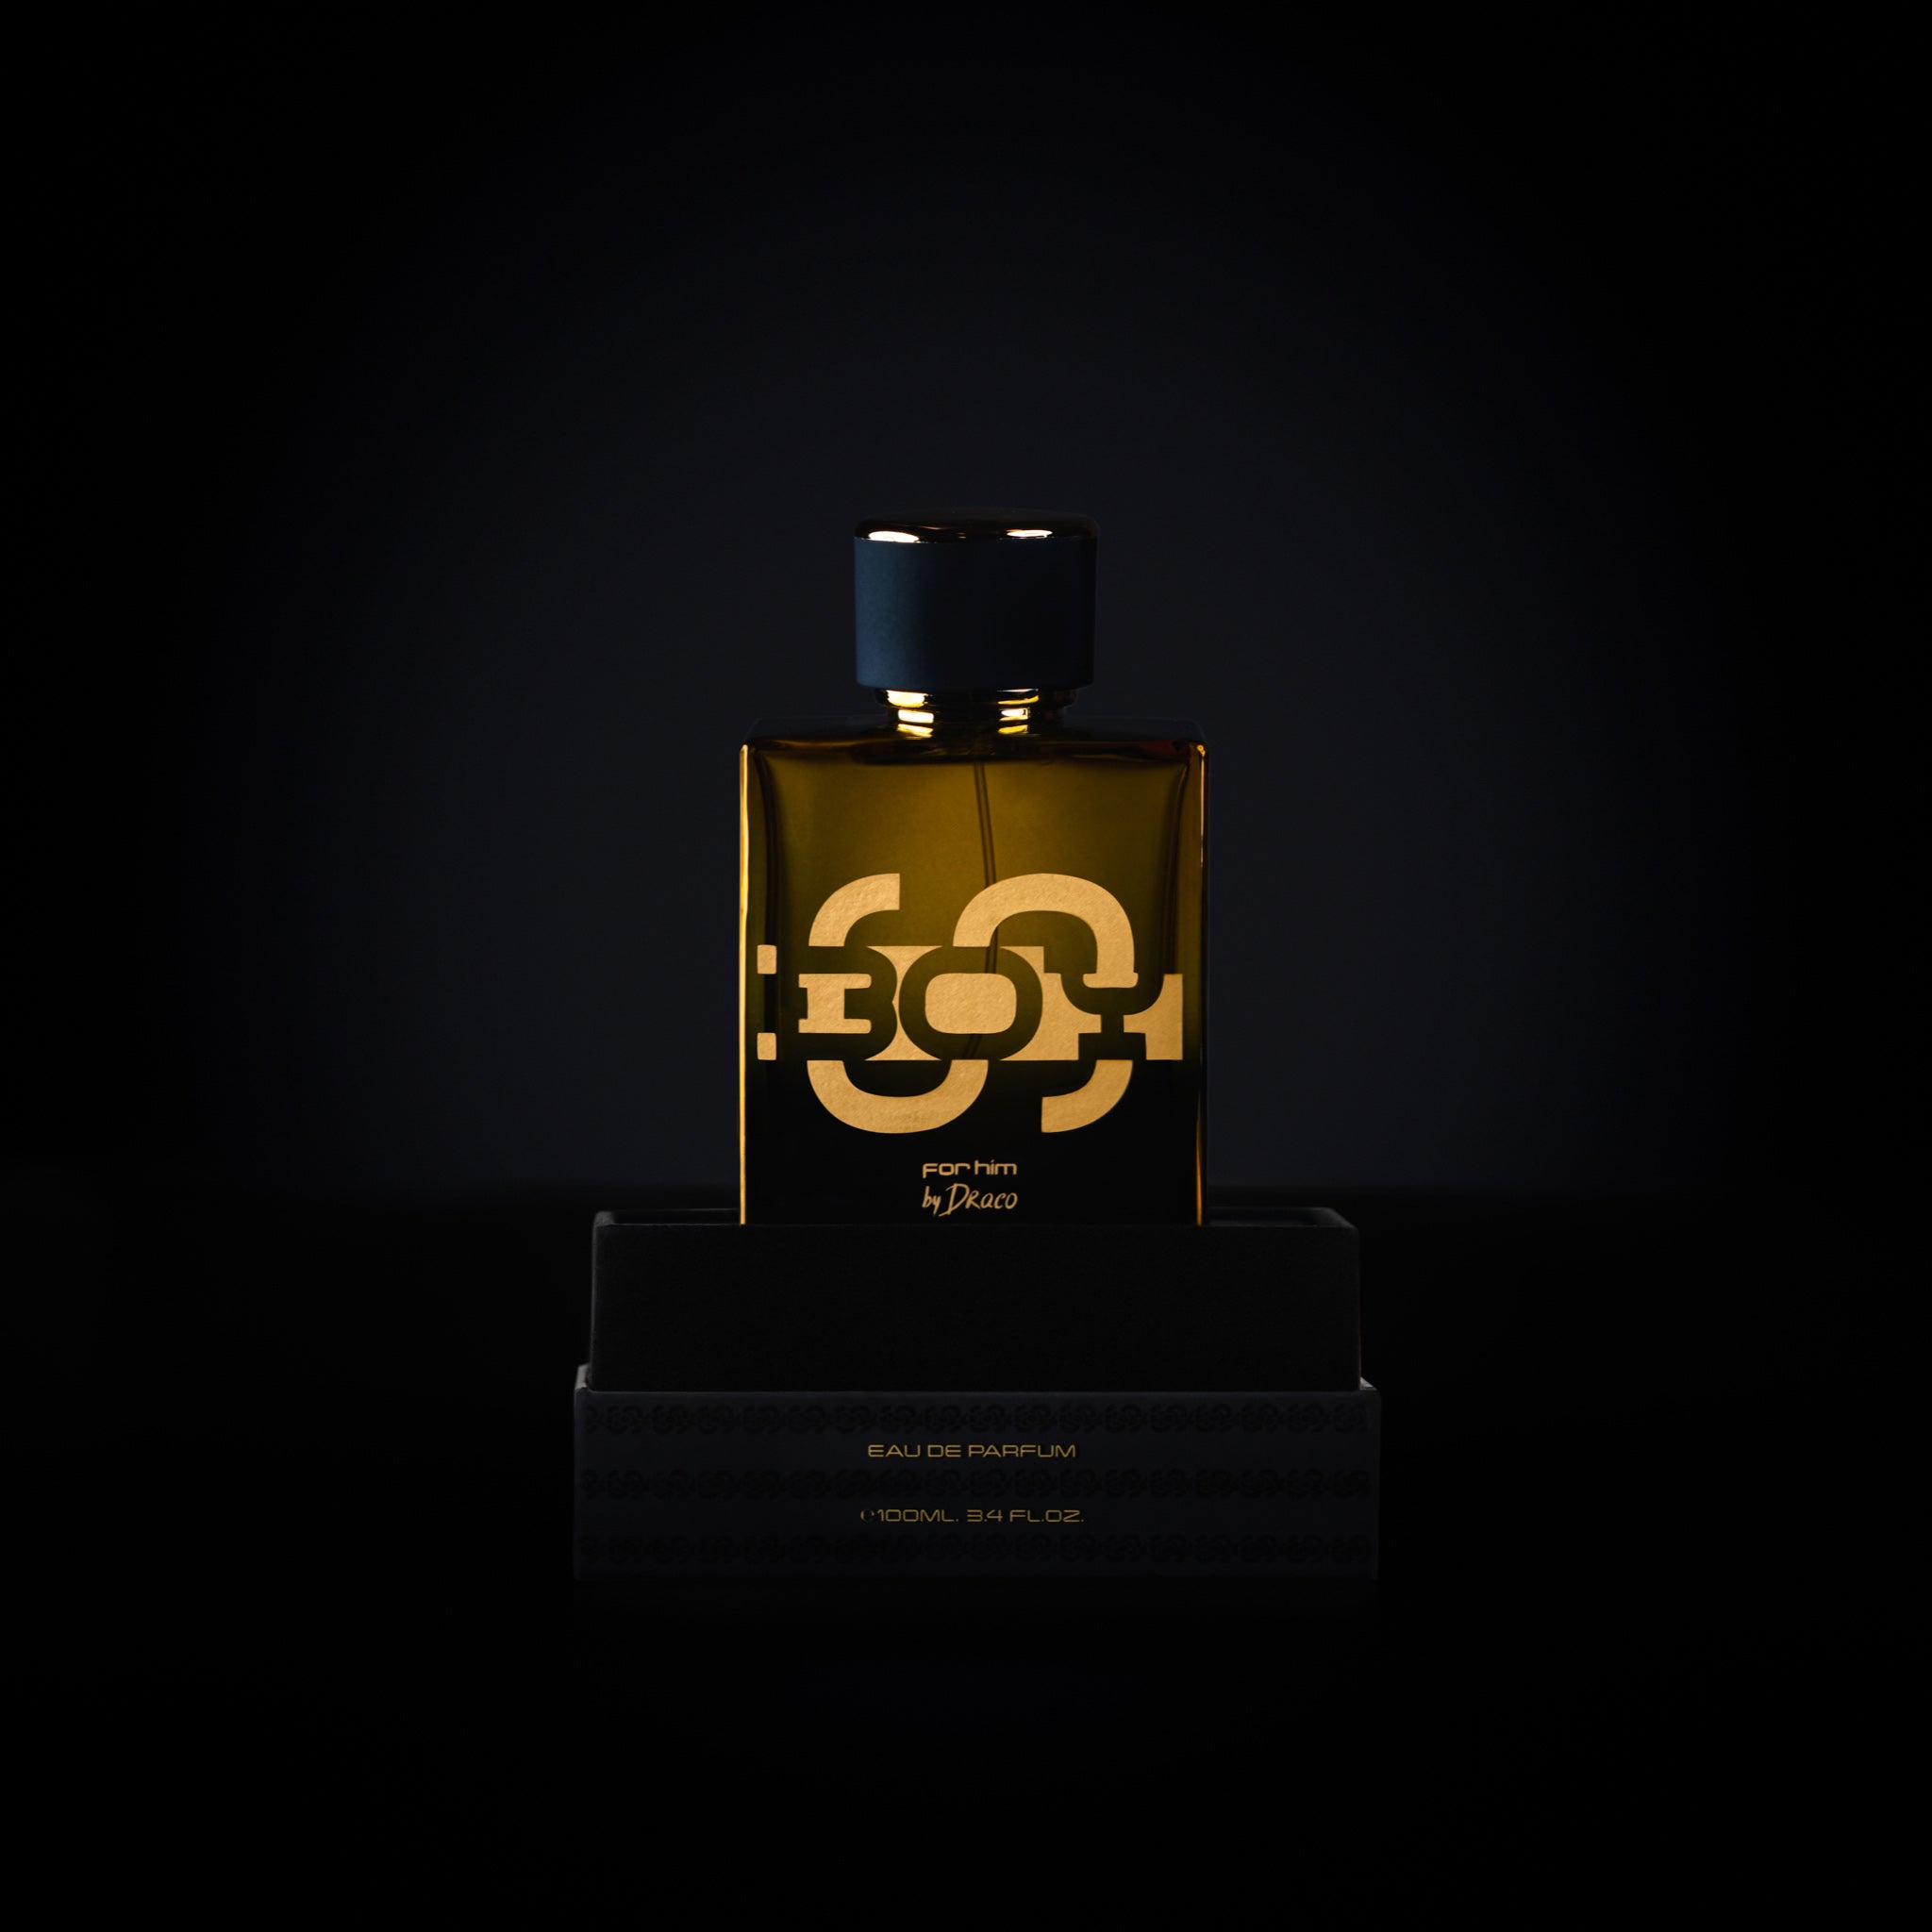 Best Perfumes Store in Miami, FL  Buy Niche Perfume Online – Osme Perfumery